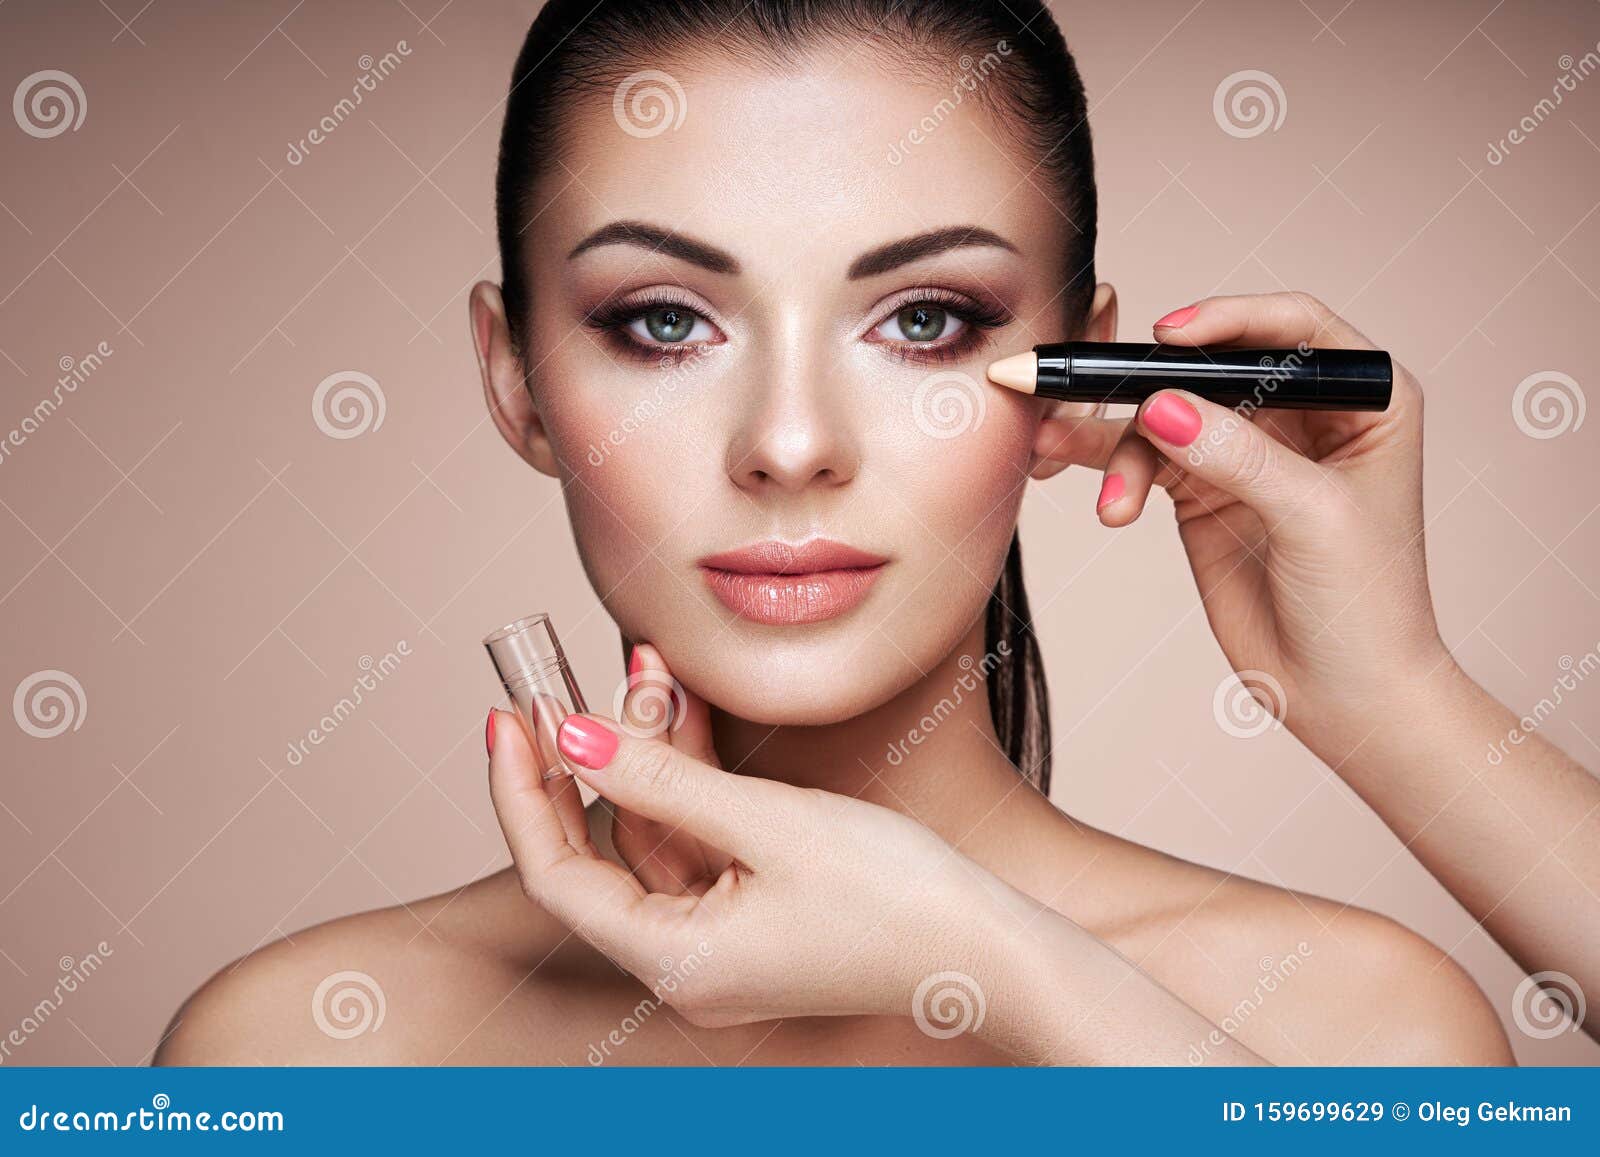 makeup artist applies skintone